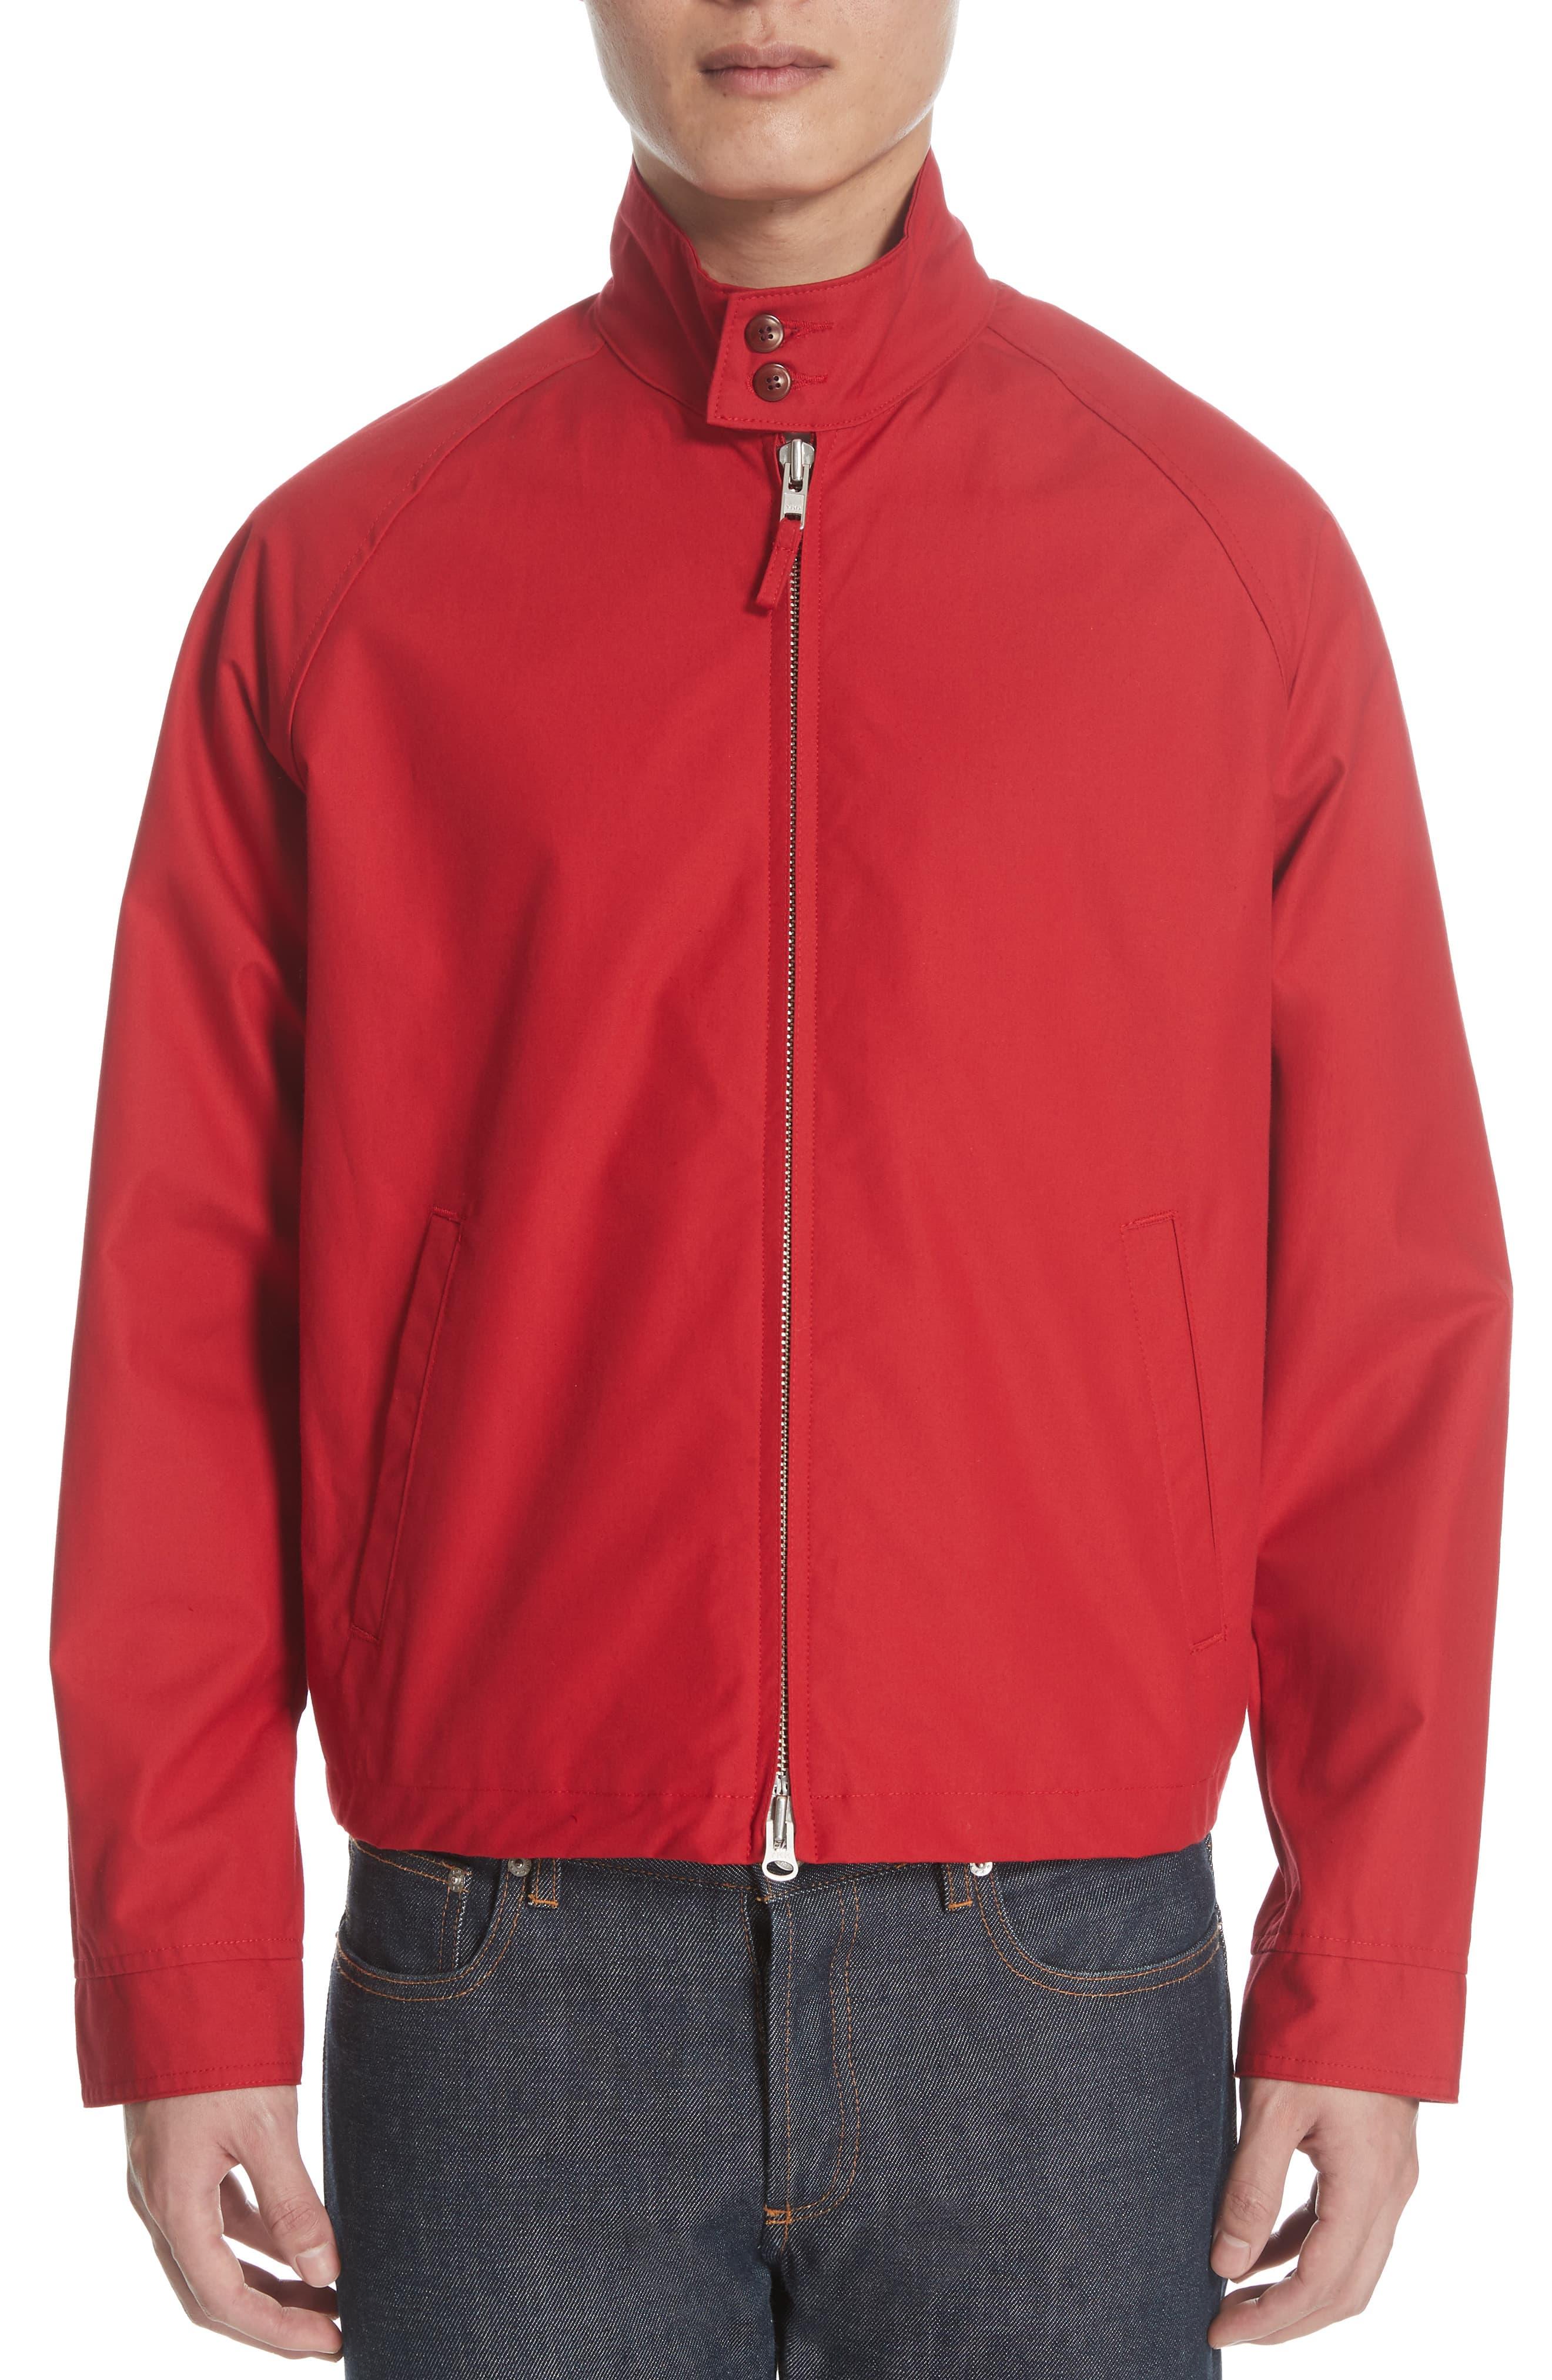 Golden Bear Harrington Waxed Cotton Jacket in Red for Men - Lyst